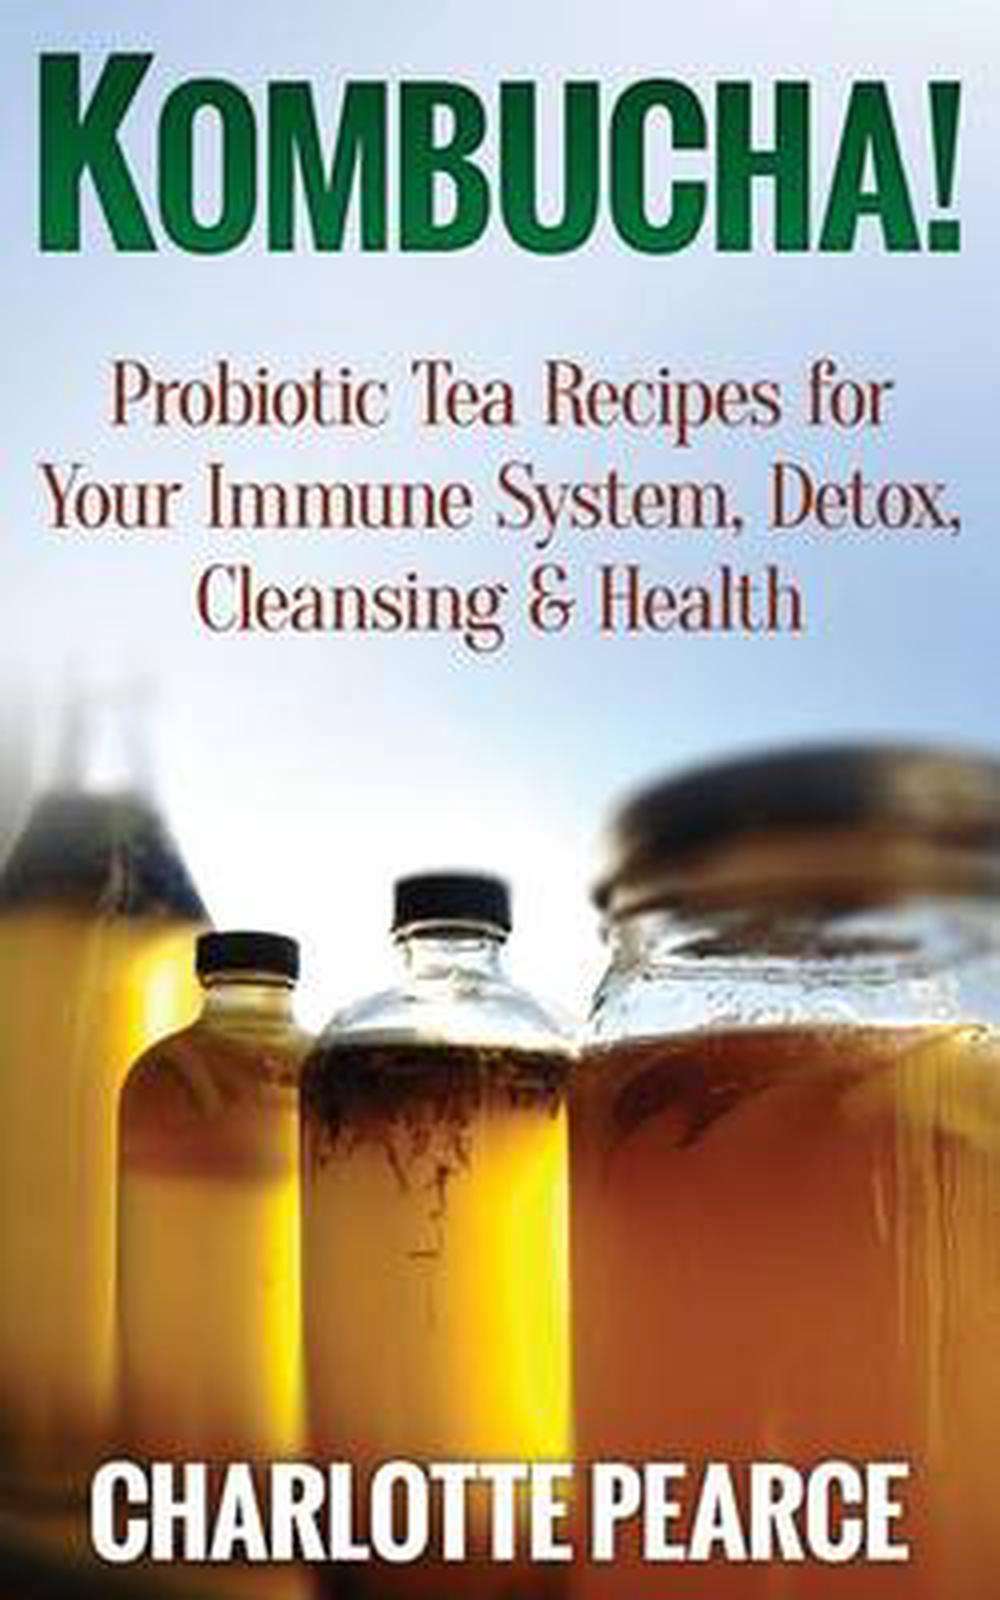 Kombucha! Probiotic Tea Recipes for Your Immune System ...